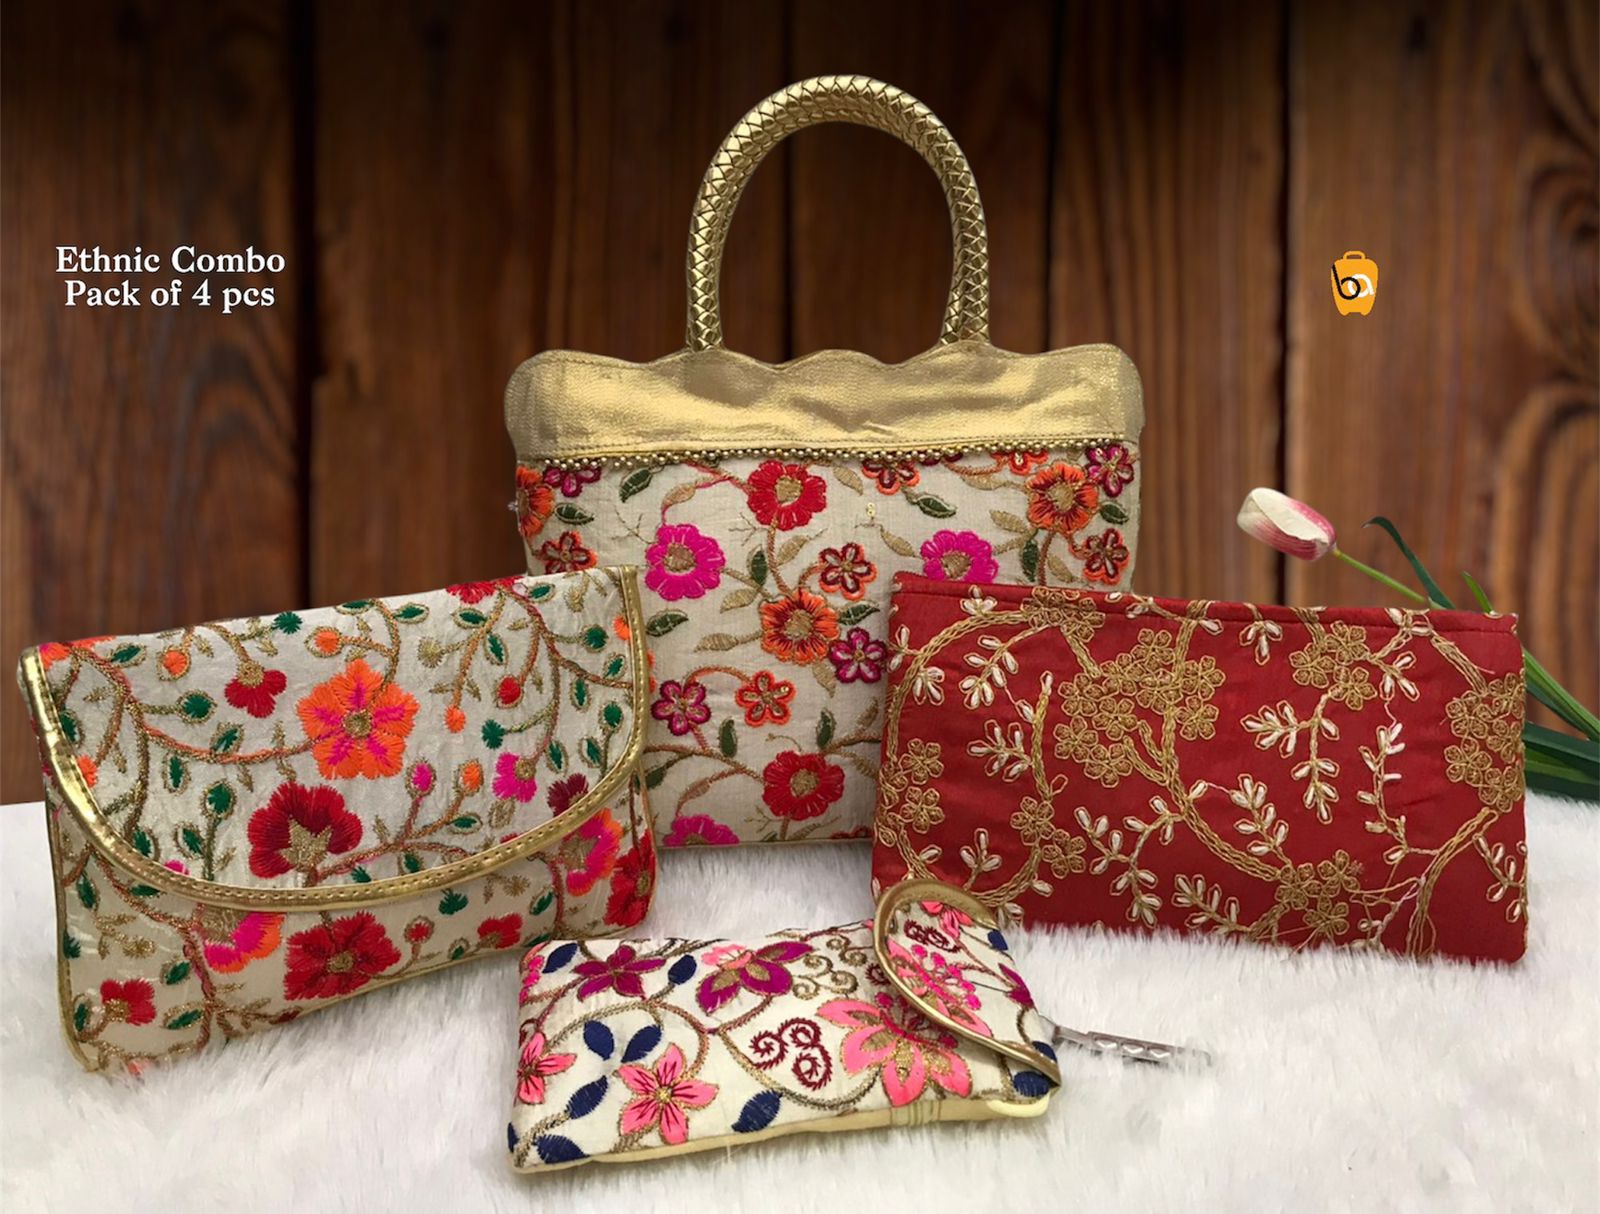 What are wholesale handbags? - Quora